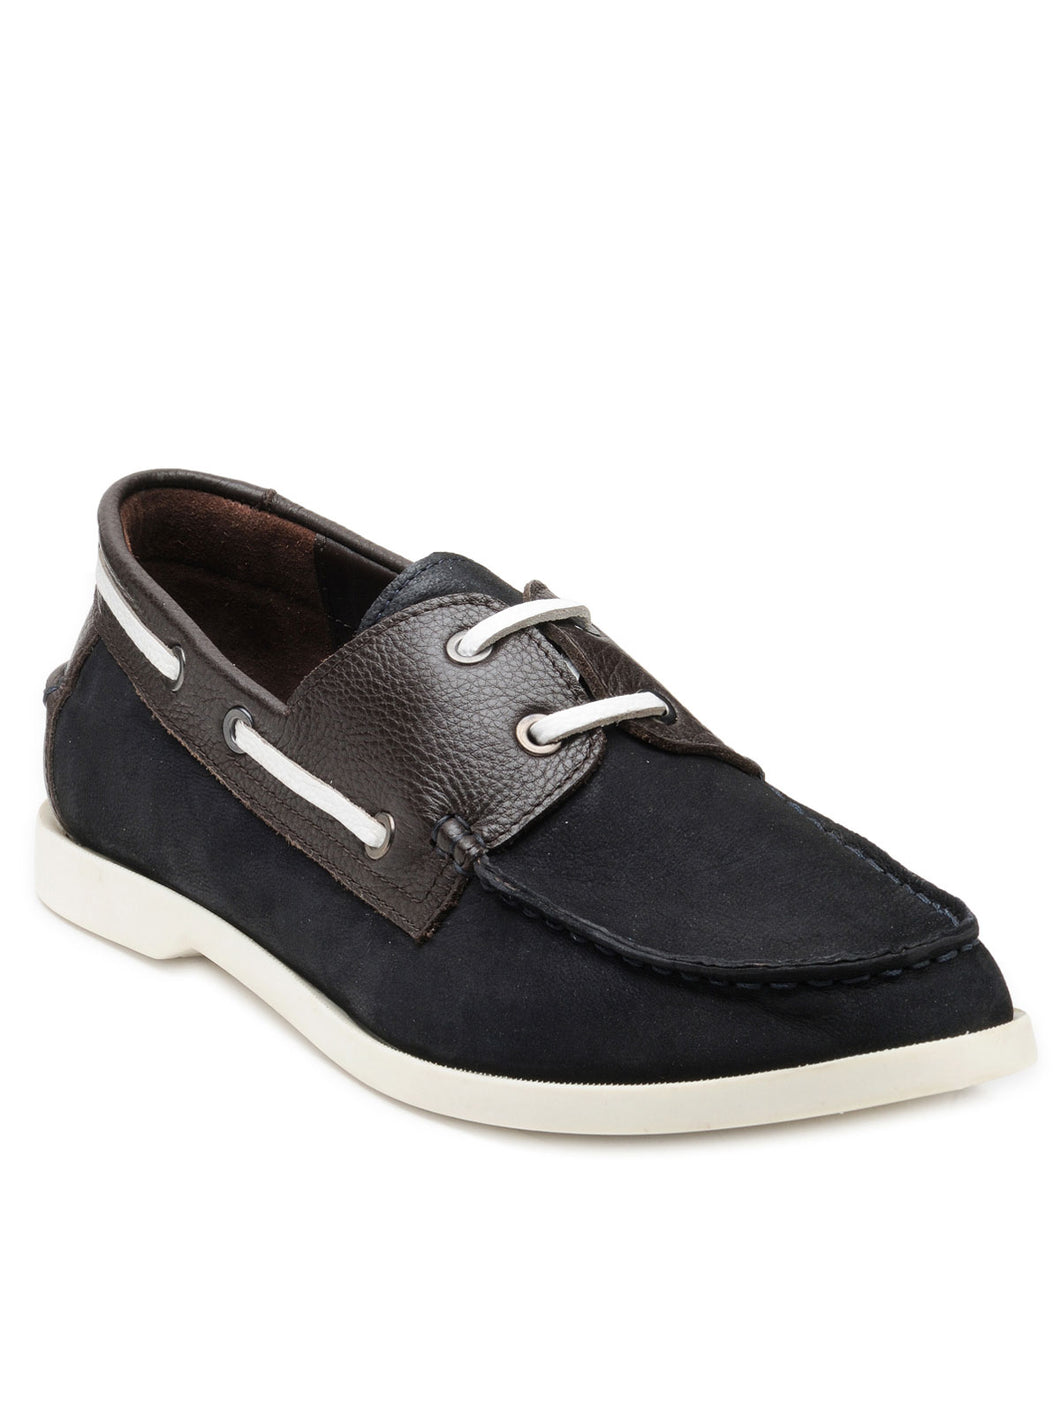 Teakwood Leather Men's Blue Slip-ons Shoes